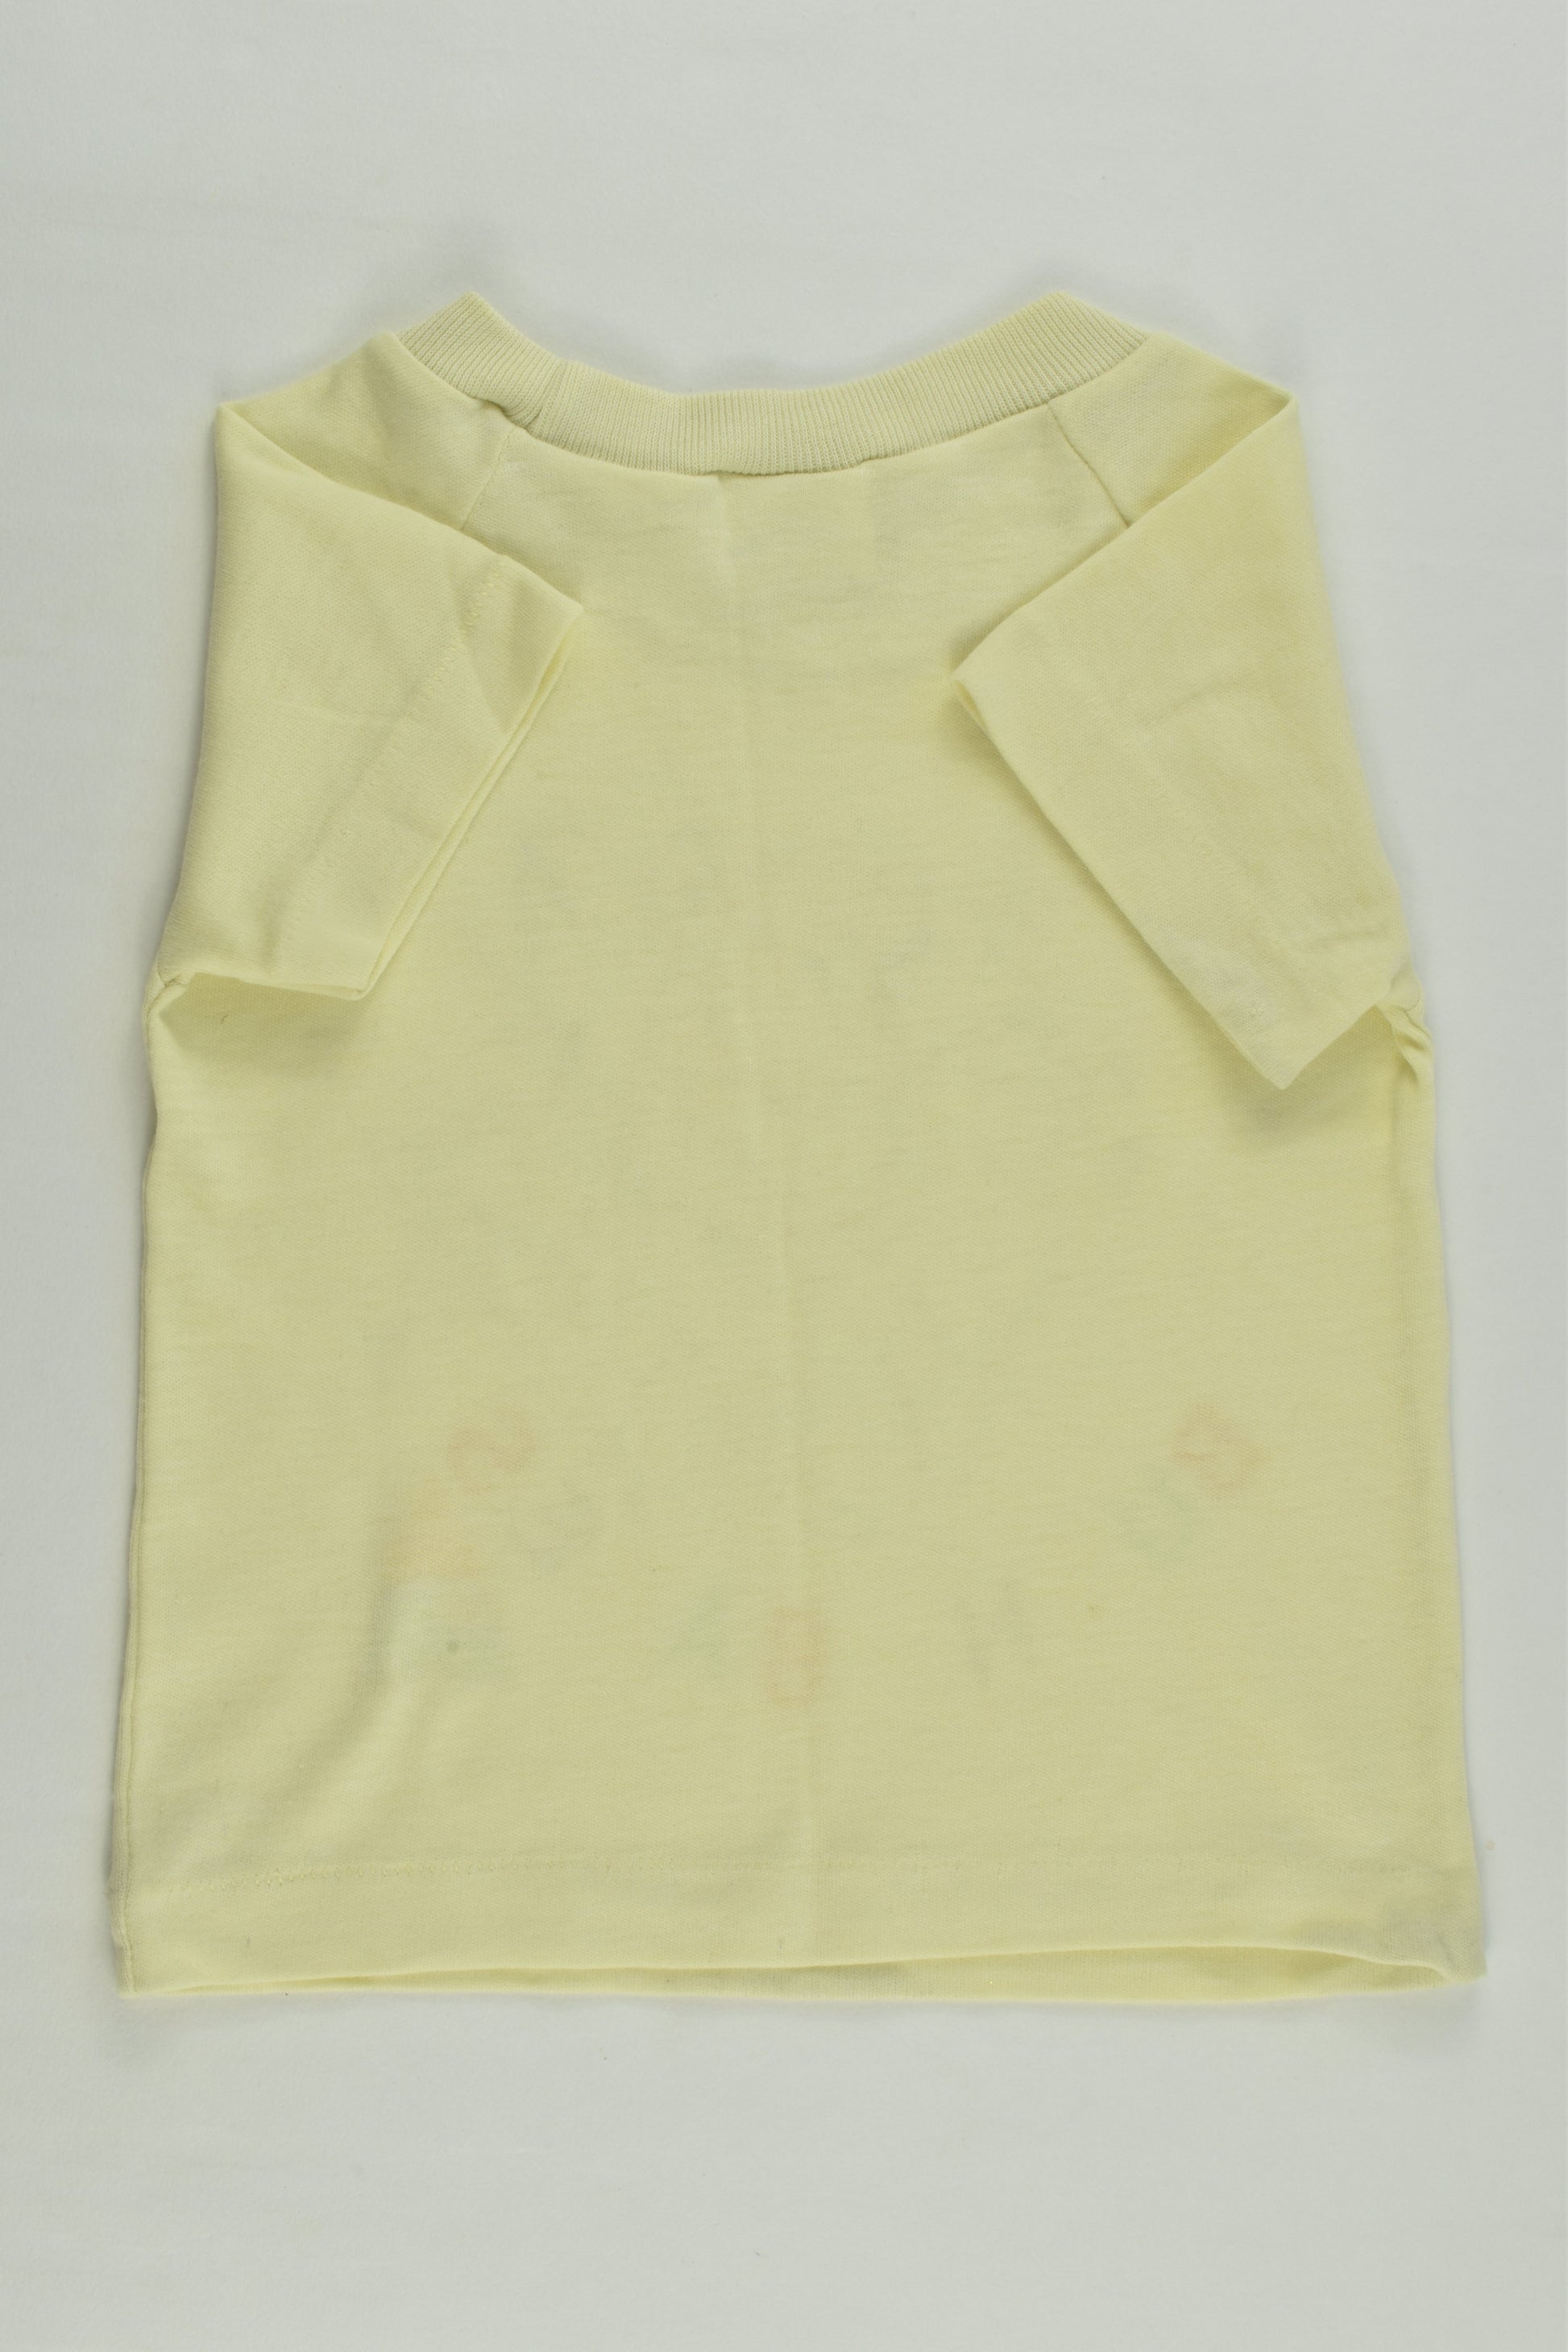 Brand Unknown Size 1 (84 cm) 'Bush Babes' Vintage T-shirt